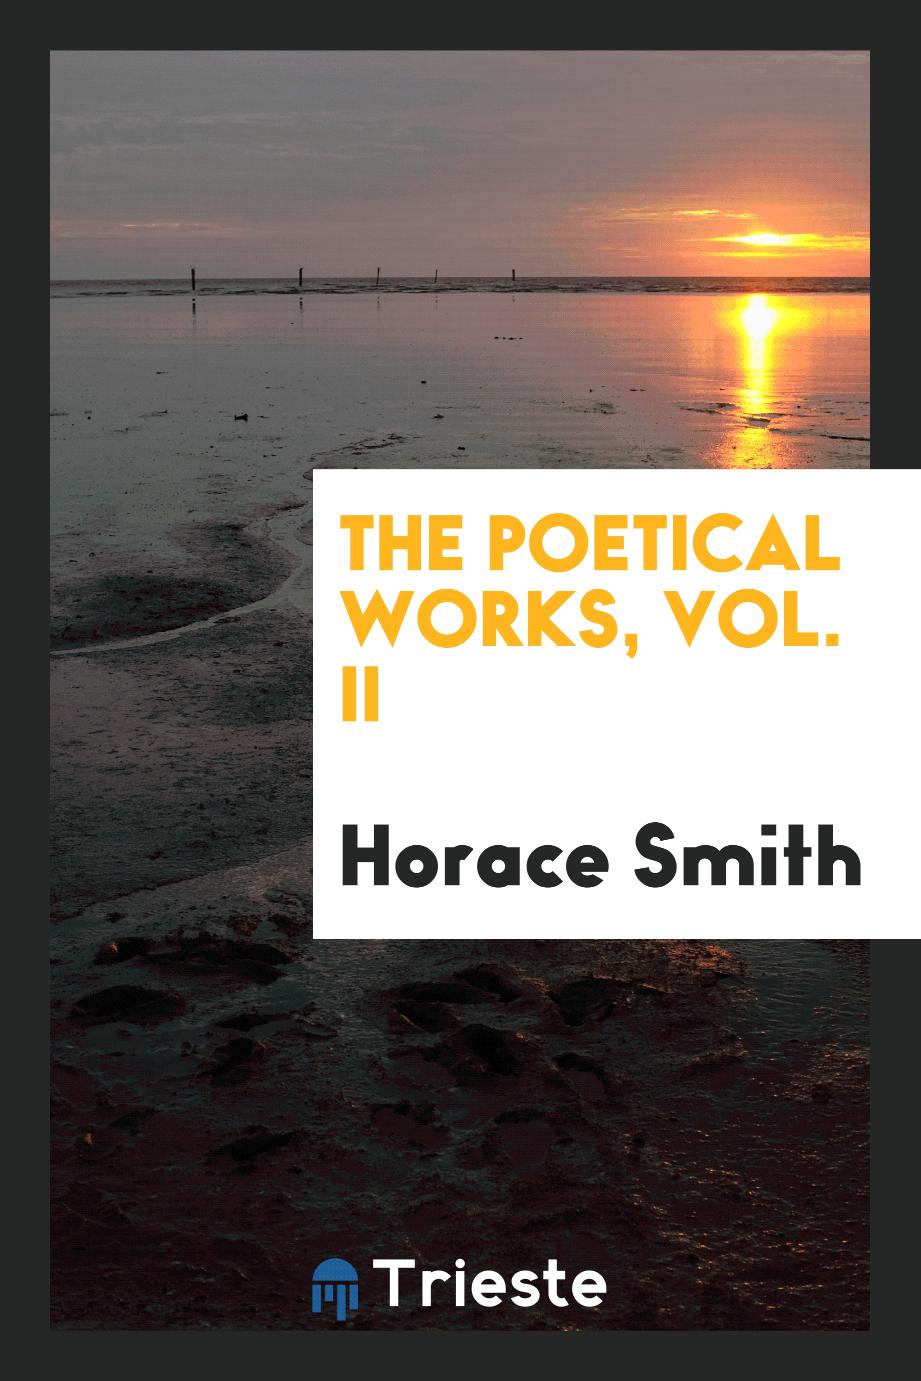 The poetical works, Vol. II